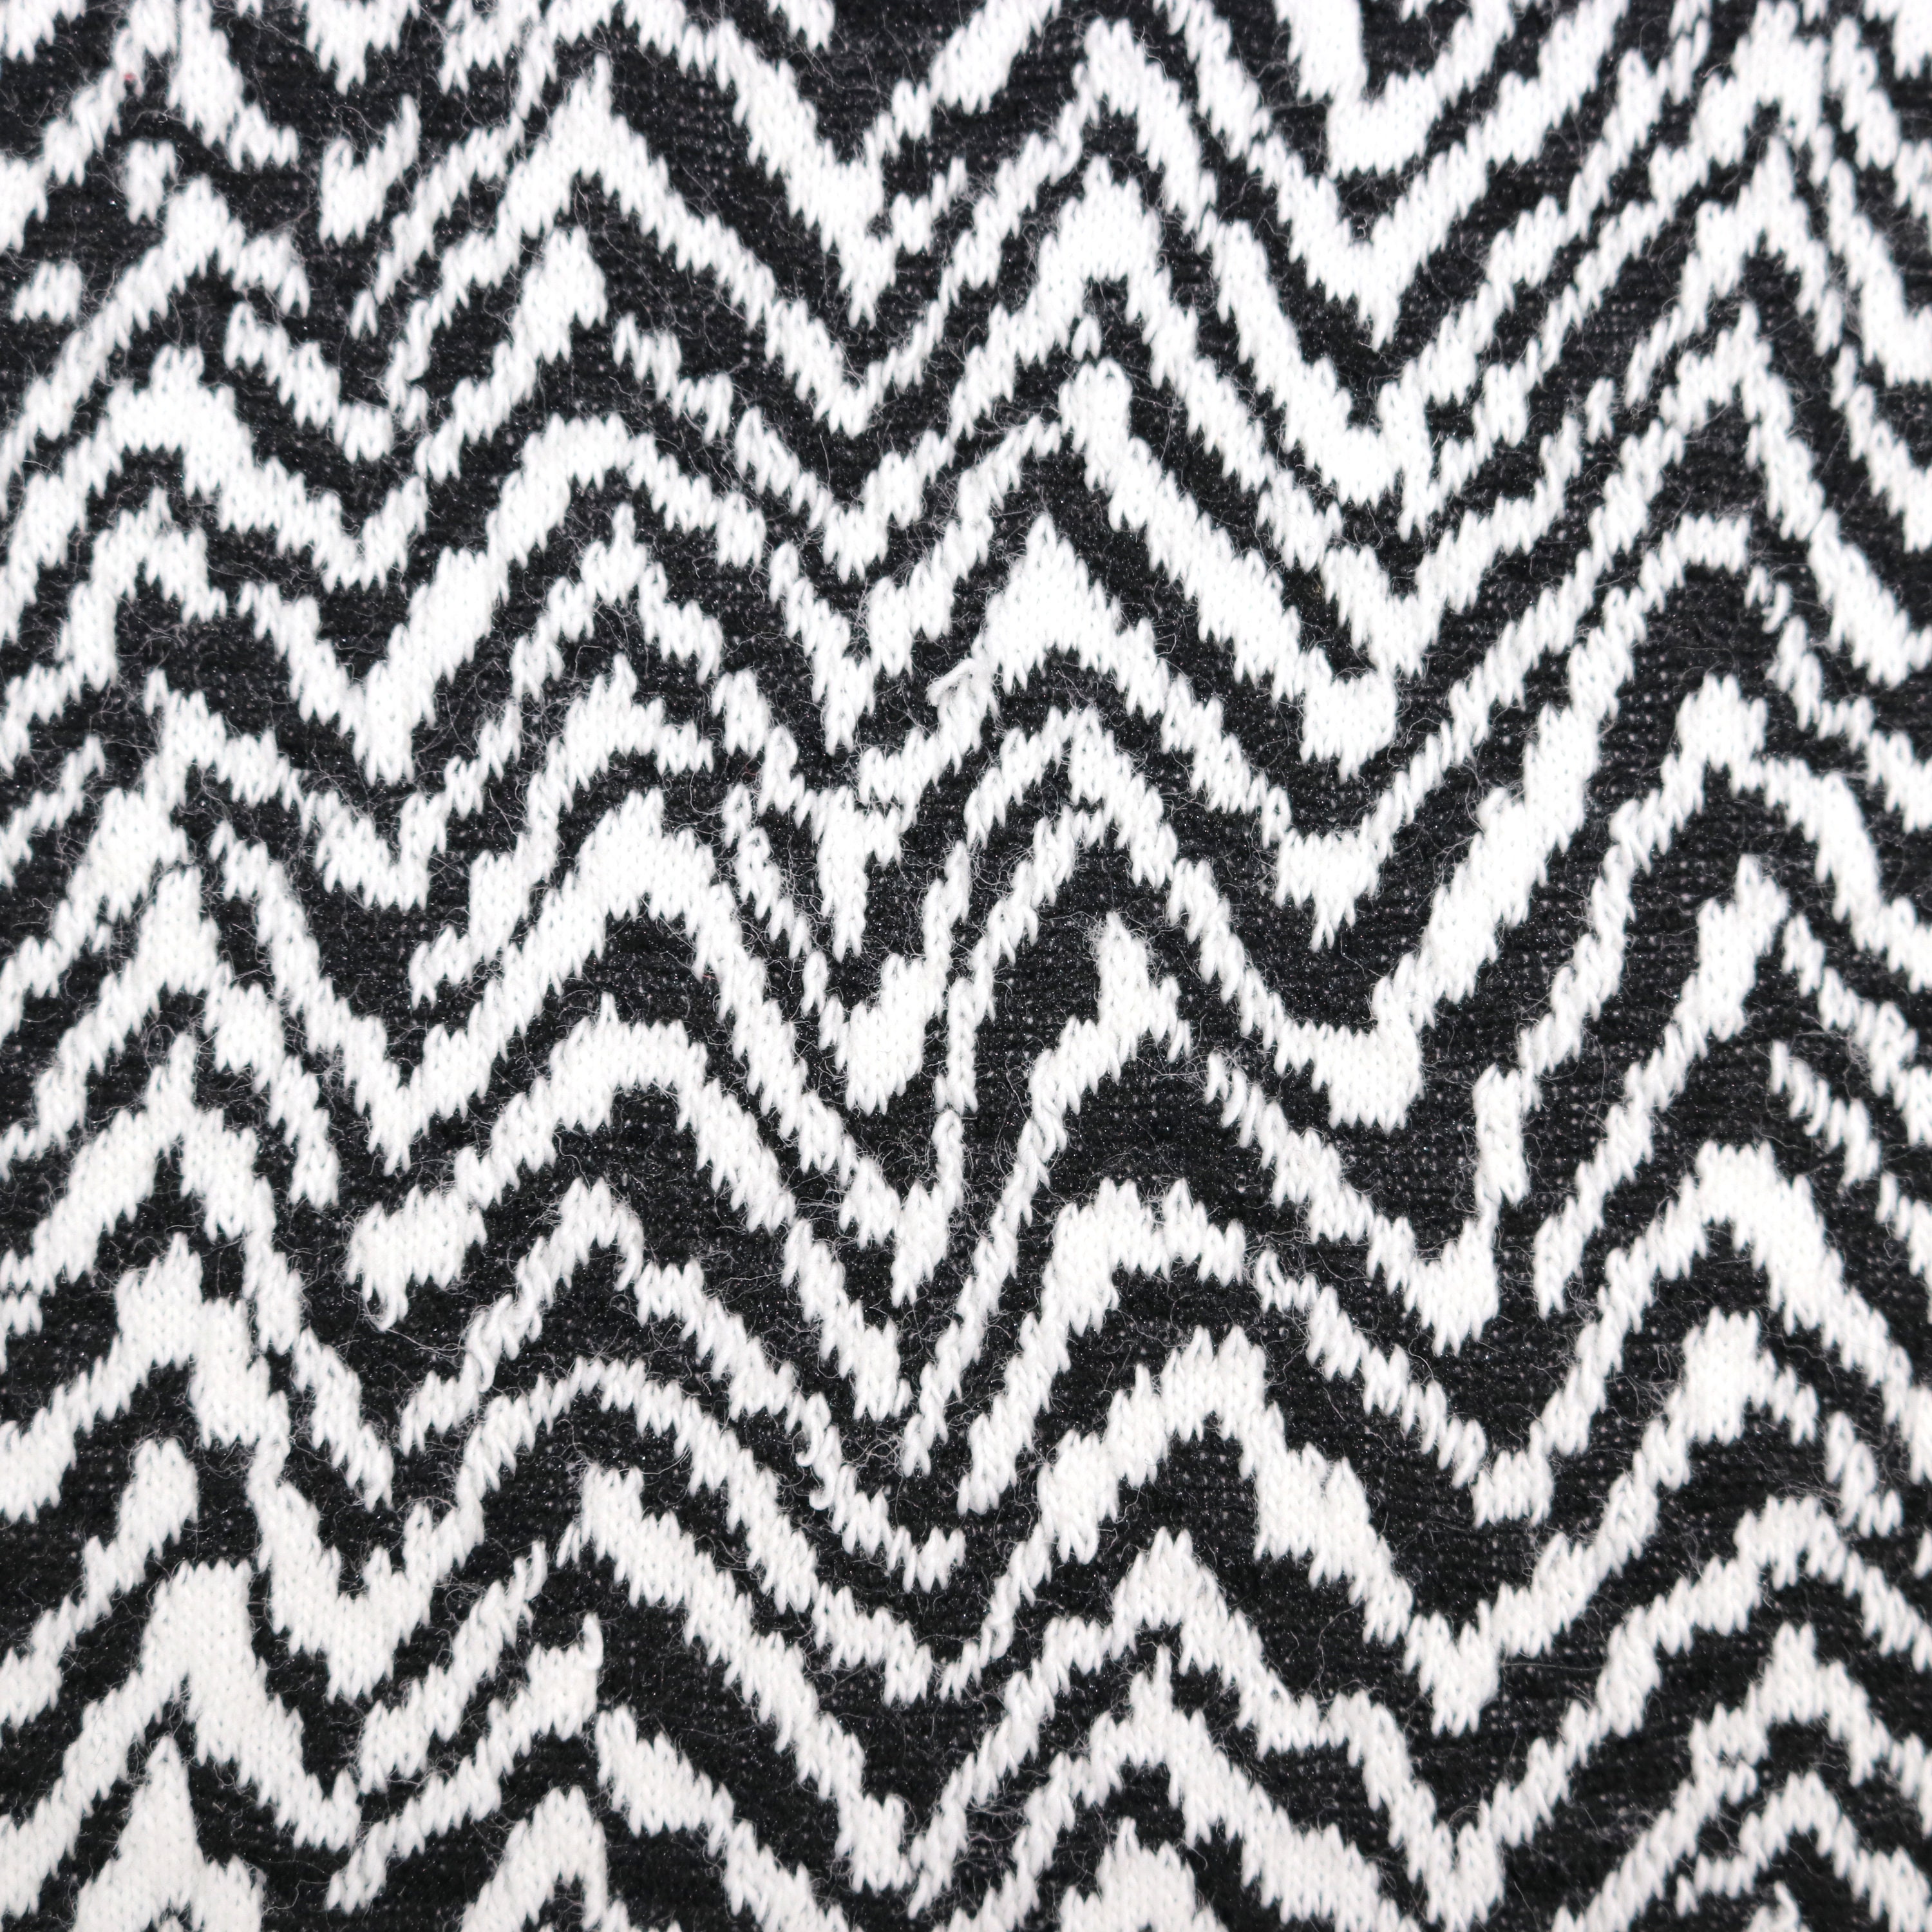 52/54 Black and White Herringbone Pattern | Etsy